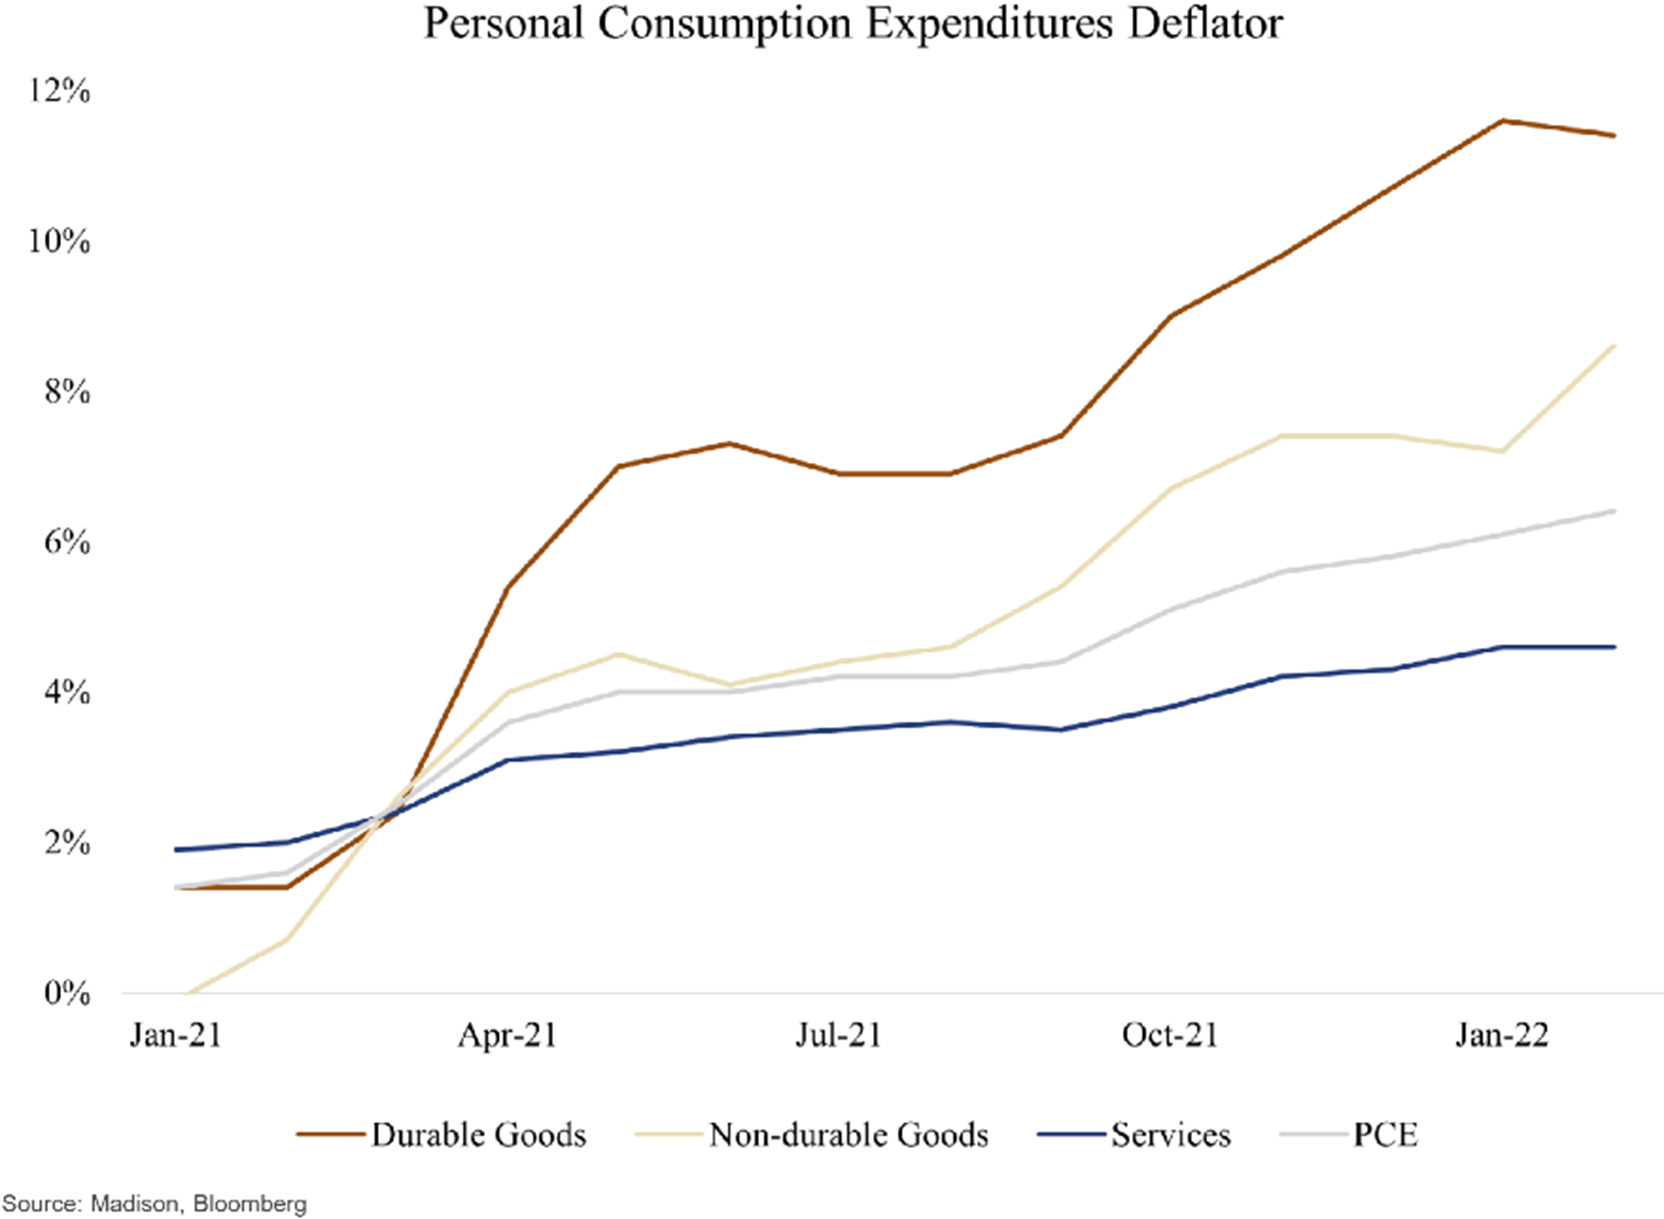 Personal Consumption Expenditures Deflator1